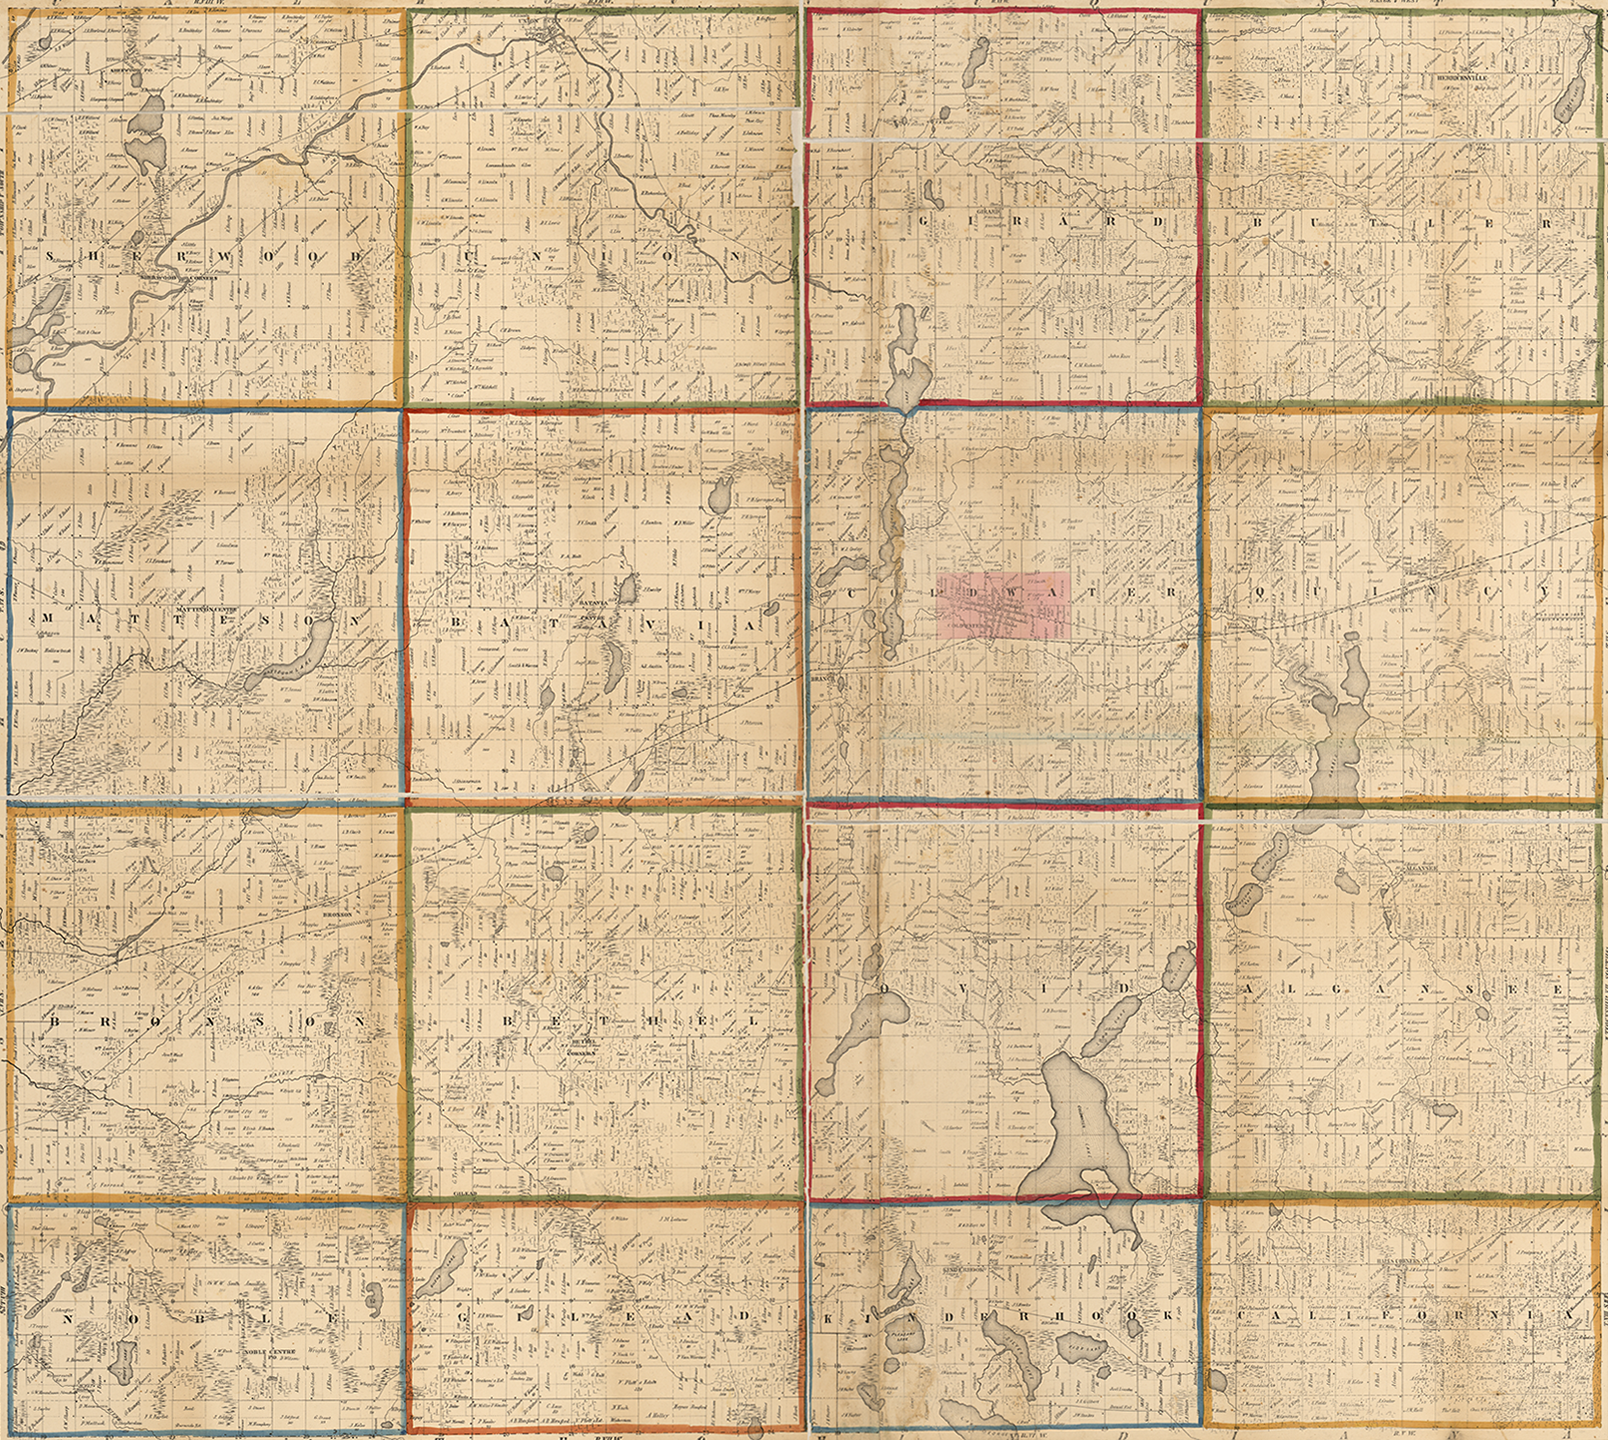 1858 Branch County, Michigan landownership map